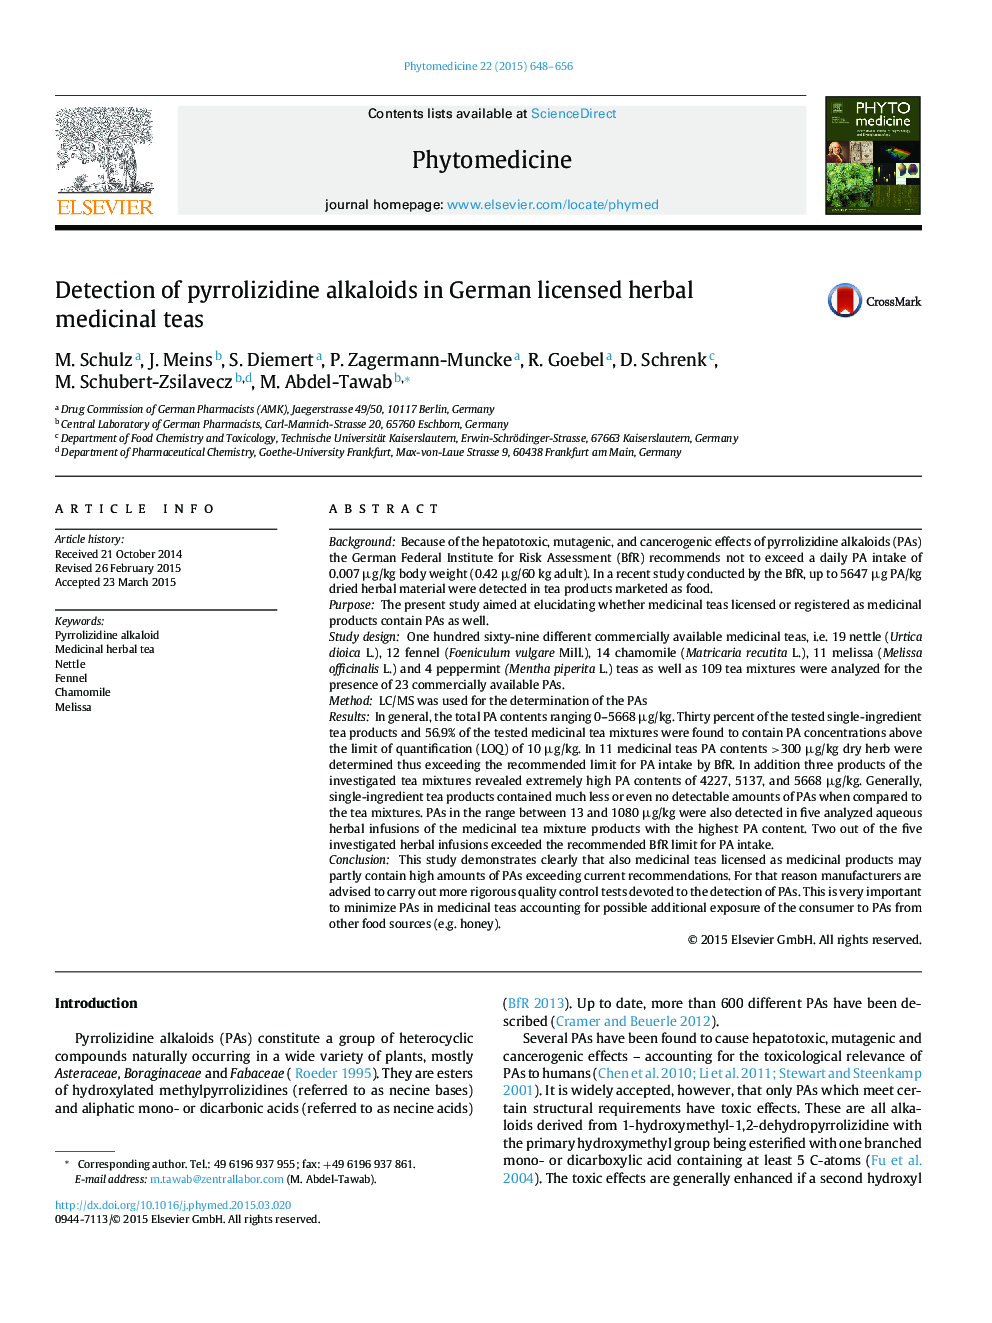 Detection of pyrrolizidine alkaloids in German licensed herbal medicinal teas